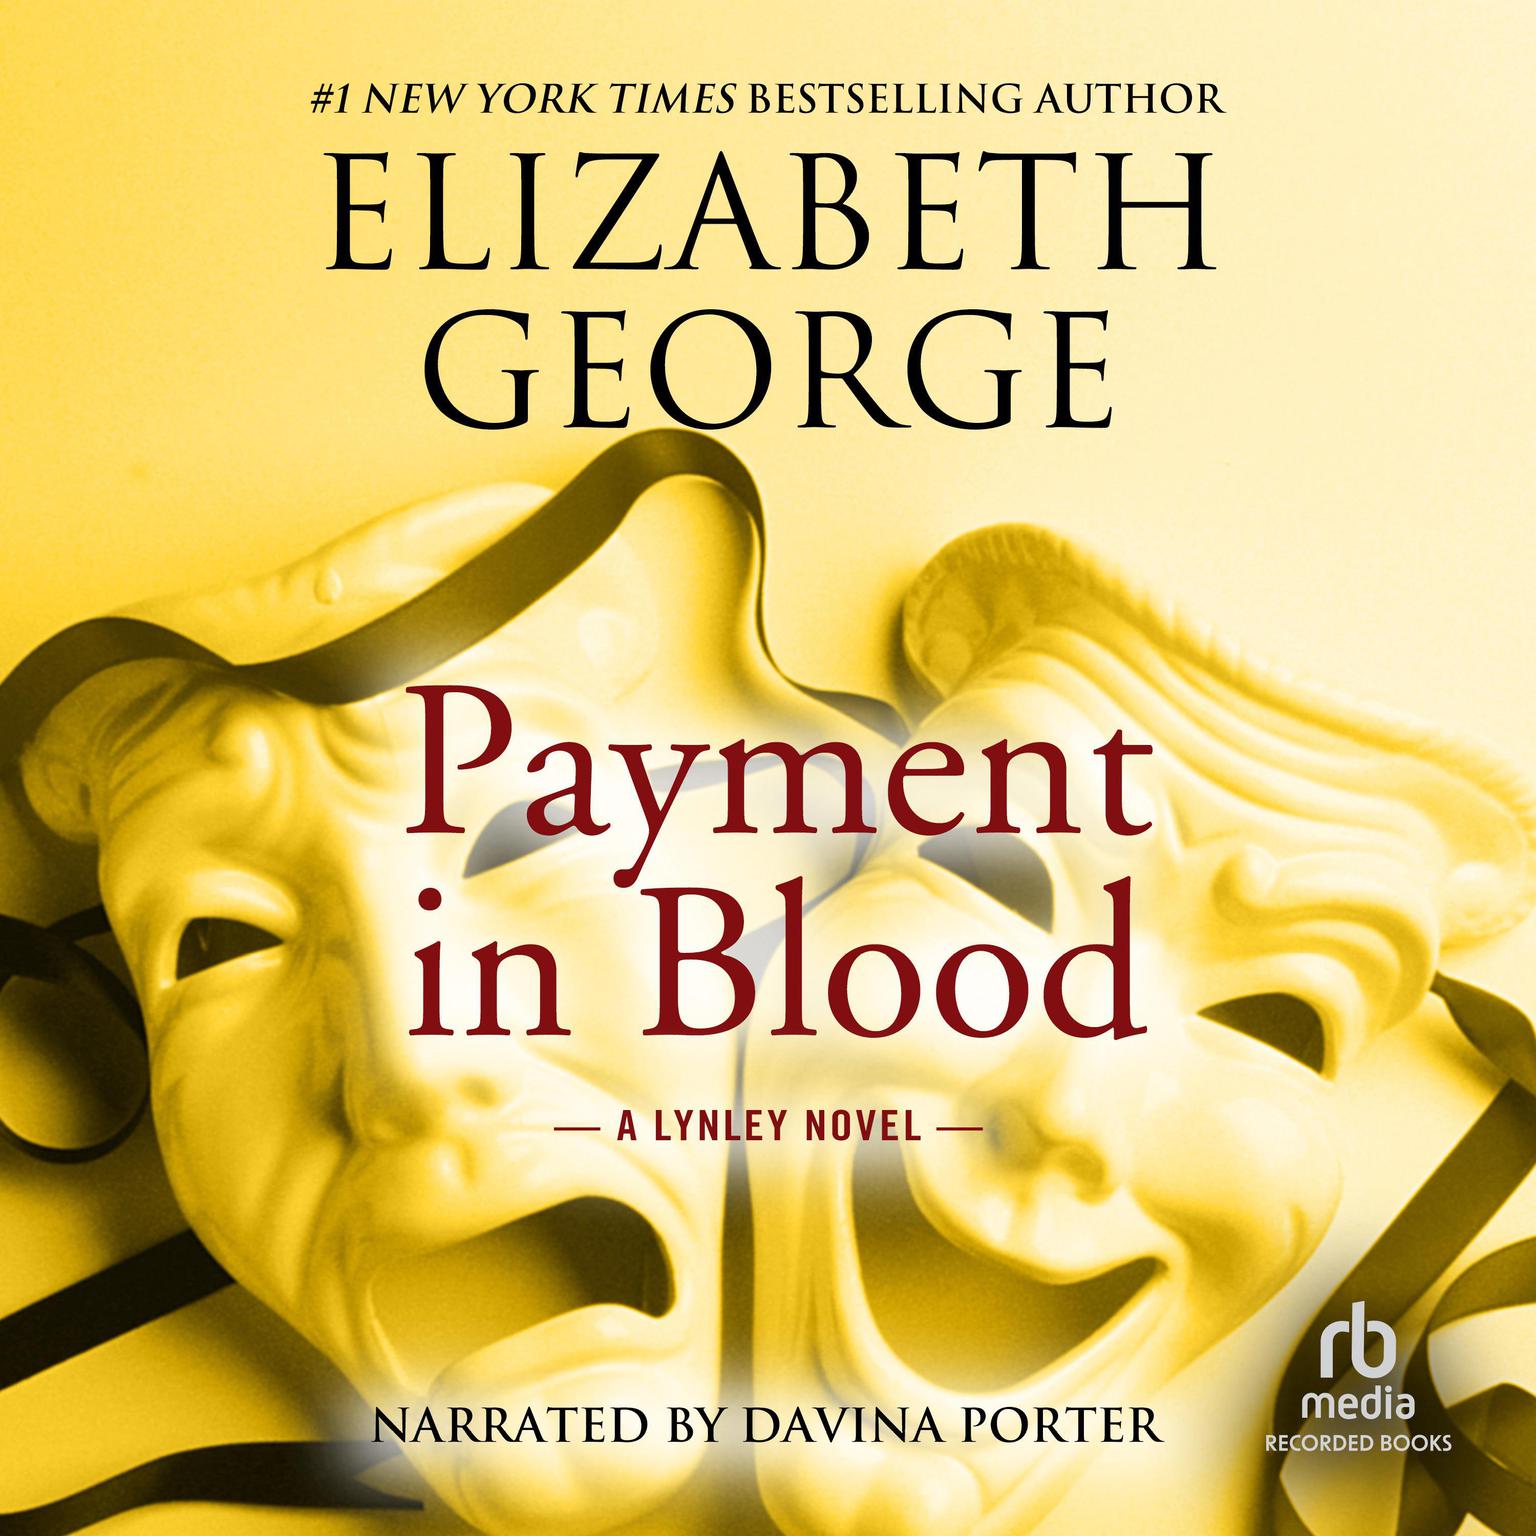 Payment in Blood Audiobook, by Elizabeth George